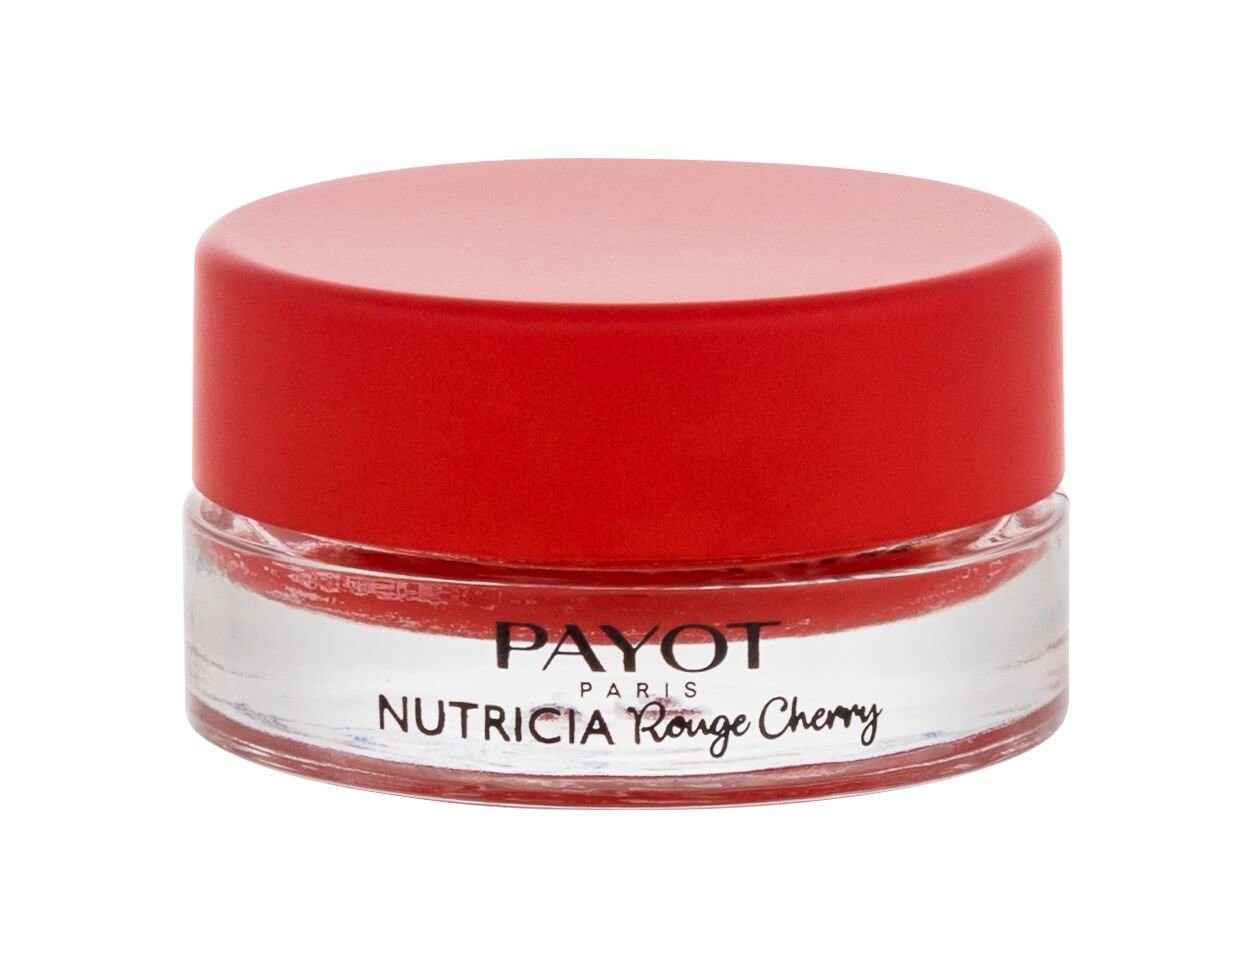 Payot Nutricia Enhancing Nourishing Lip Balm lūpų balzamas